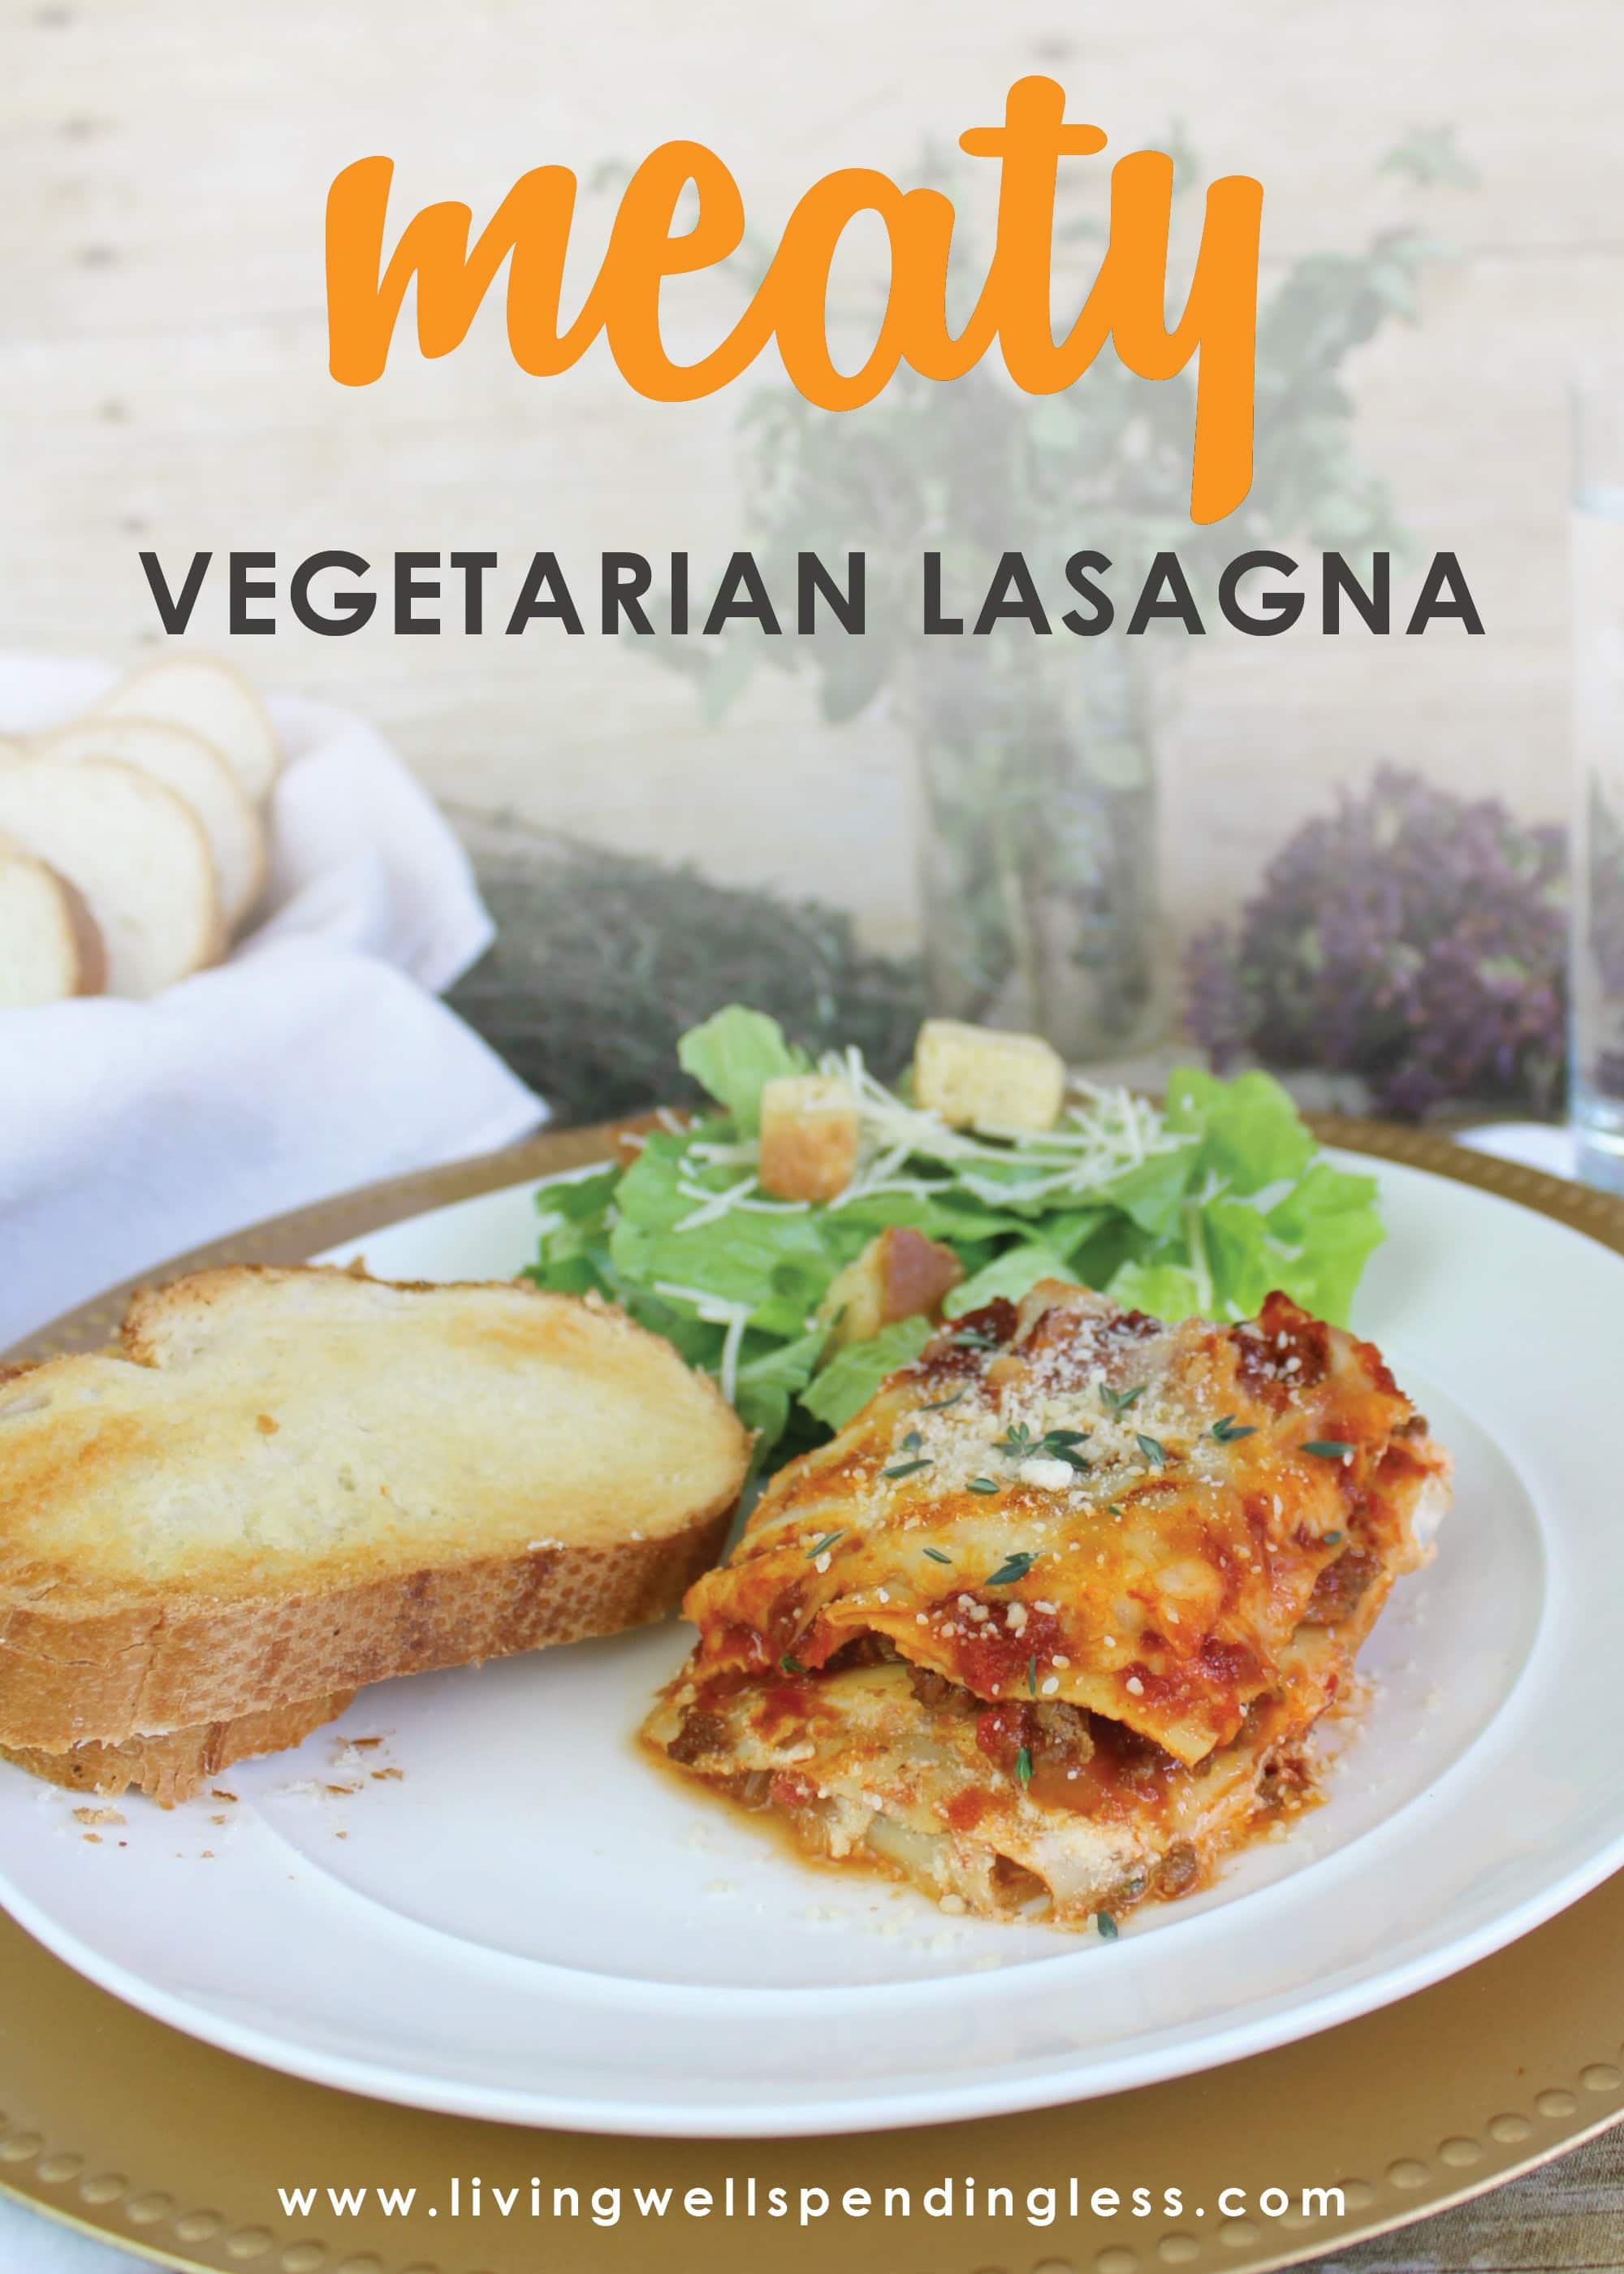 Easy "Meaty" Vegetarian Lasagna Recipe | Meatless Vegetable Lasagna